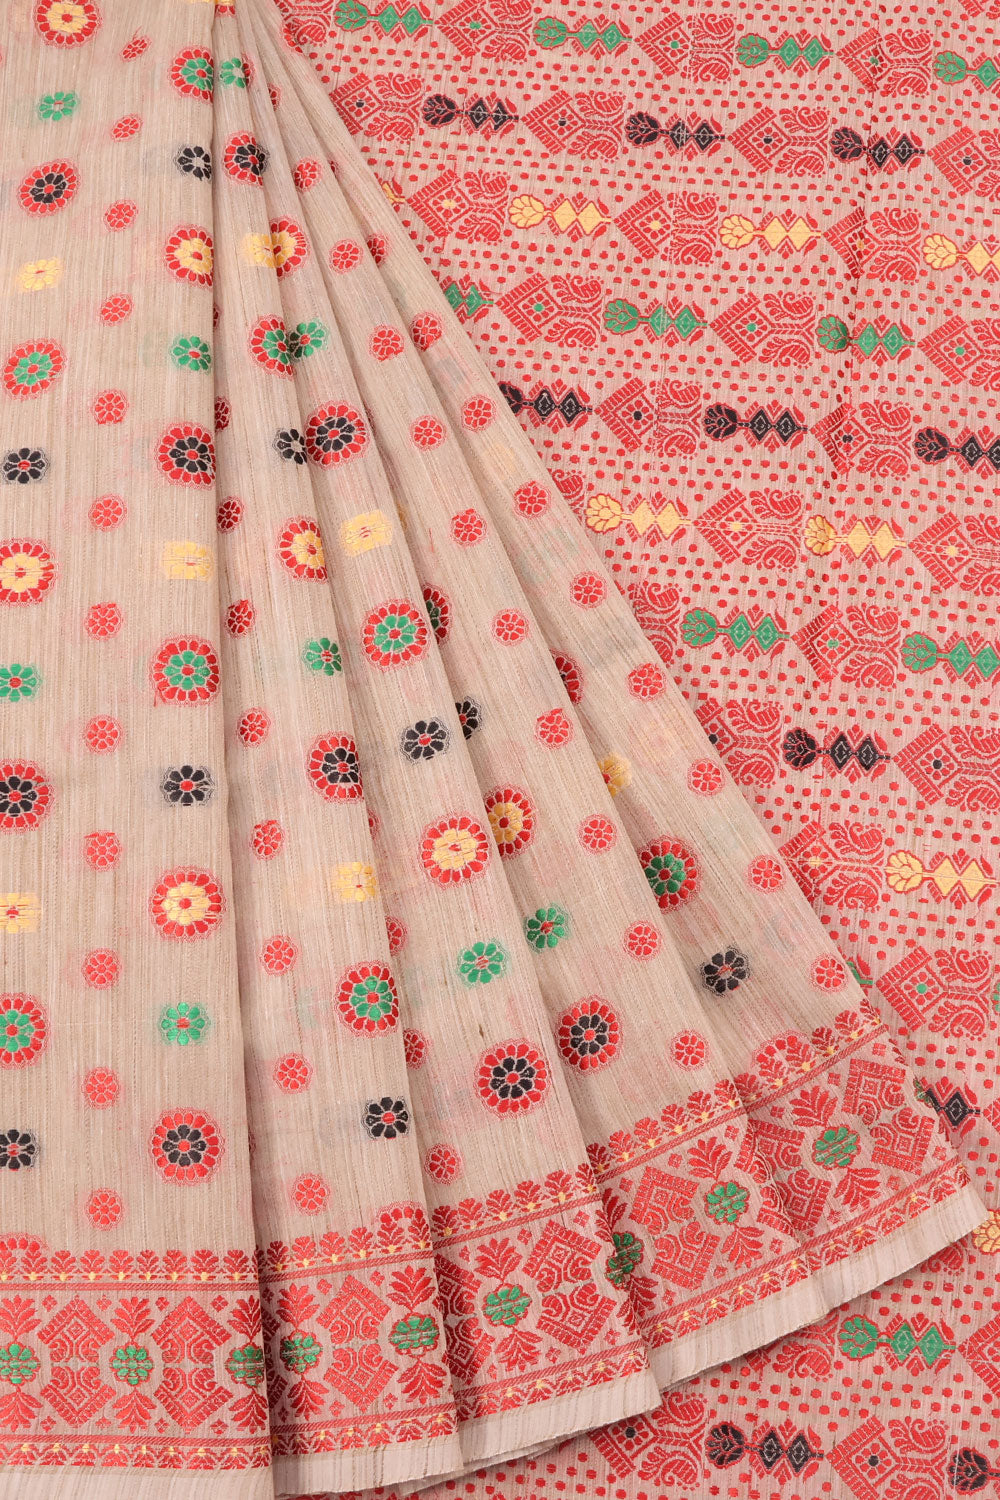 Assam Eri Silk Cotton Saree with Meenakari Floral Motifs and Embroidered Pallu